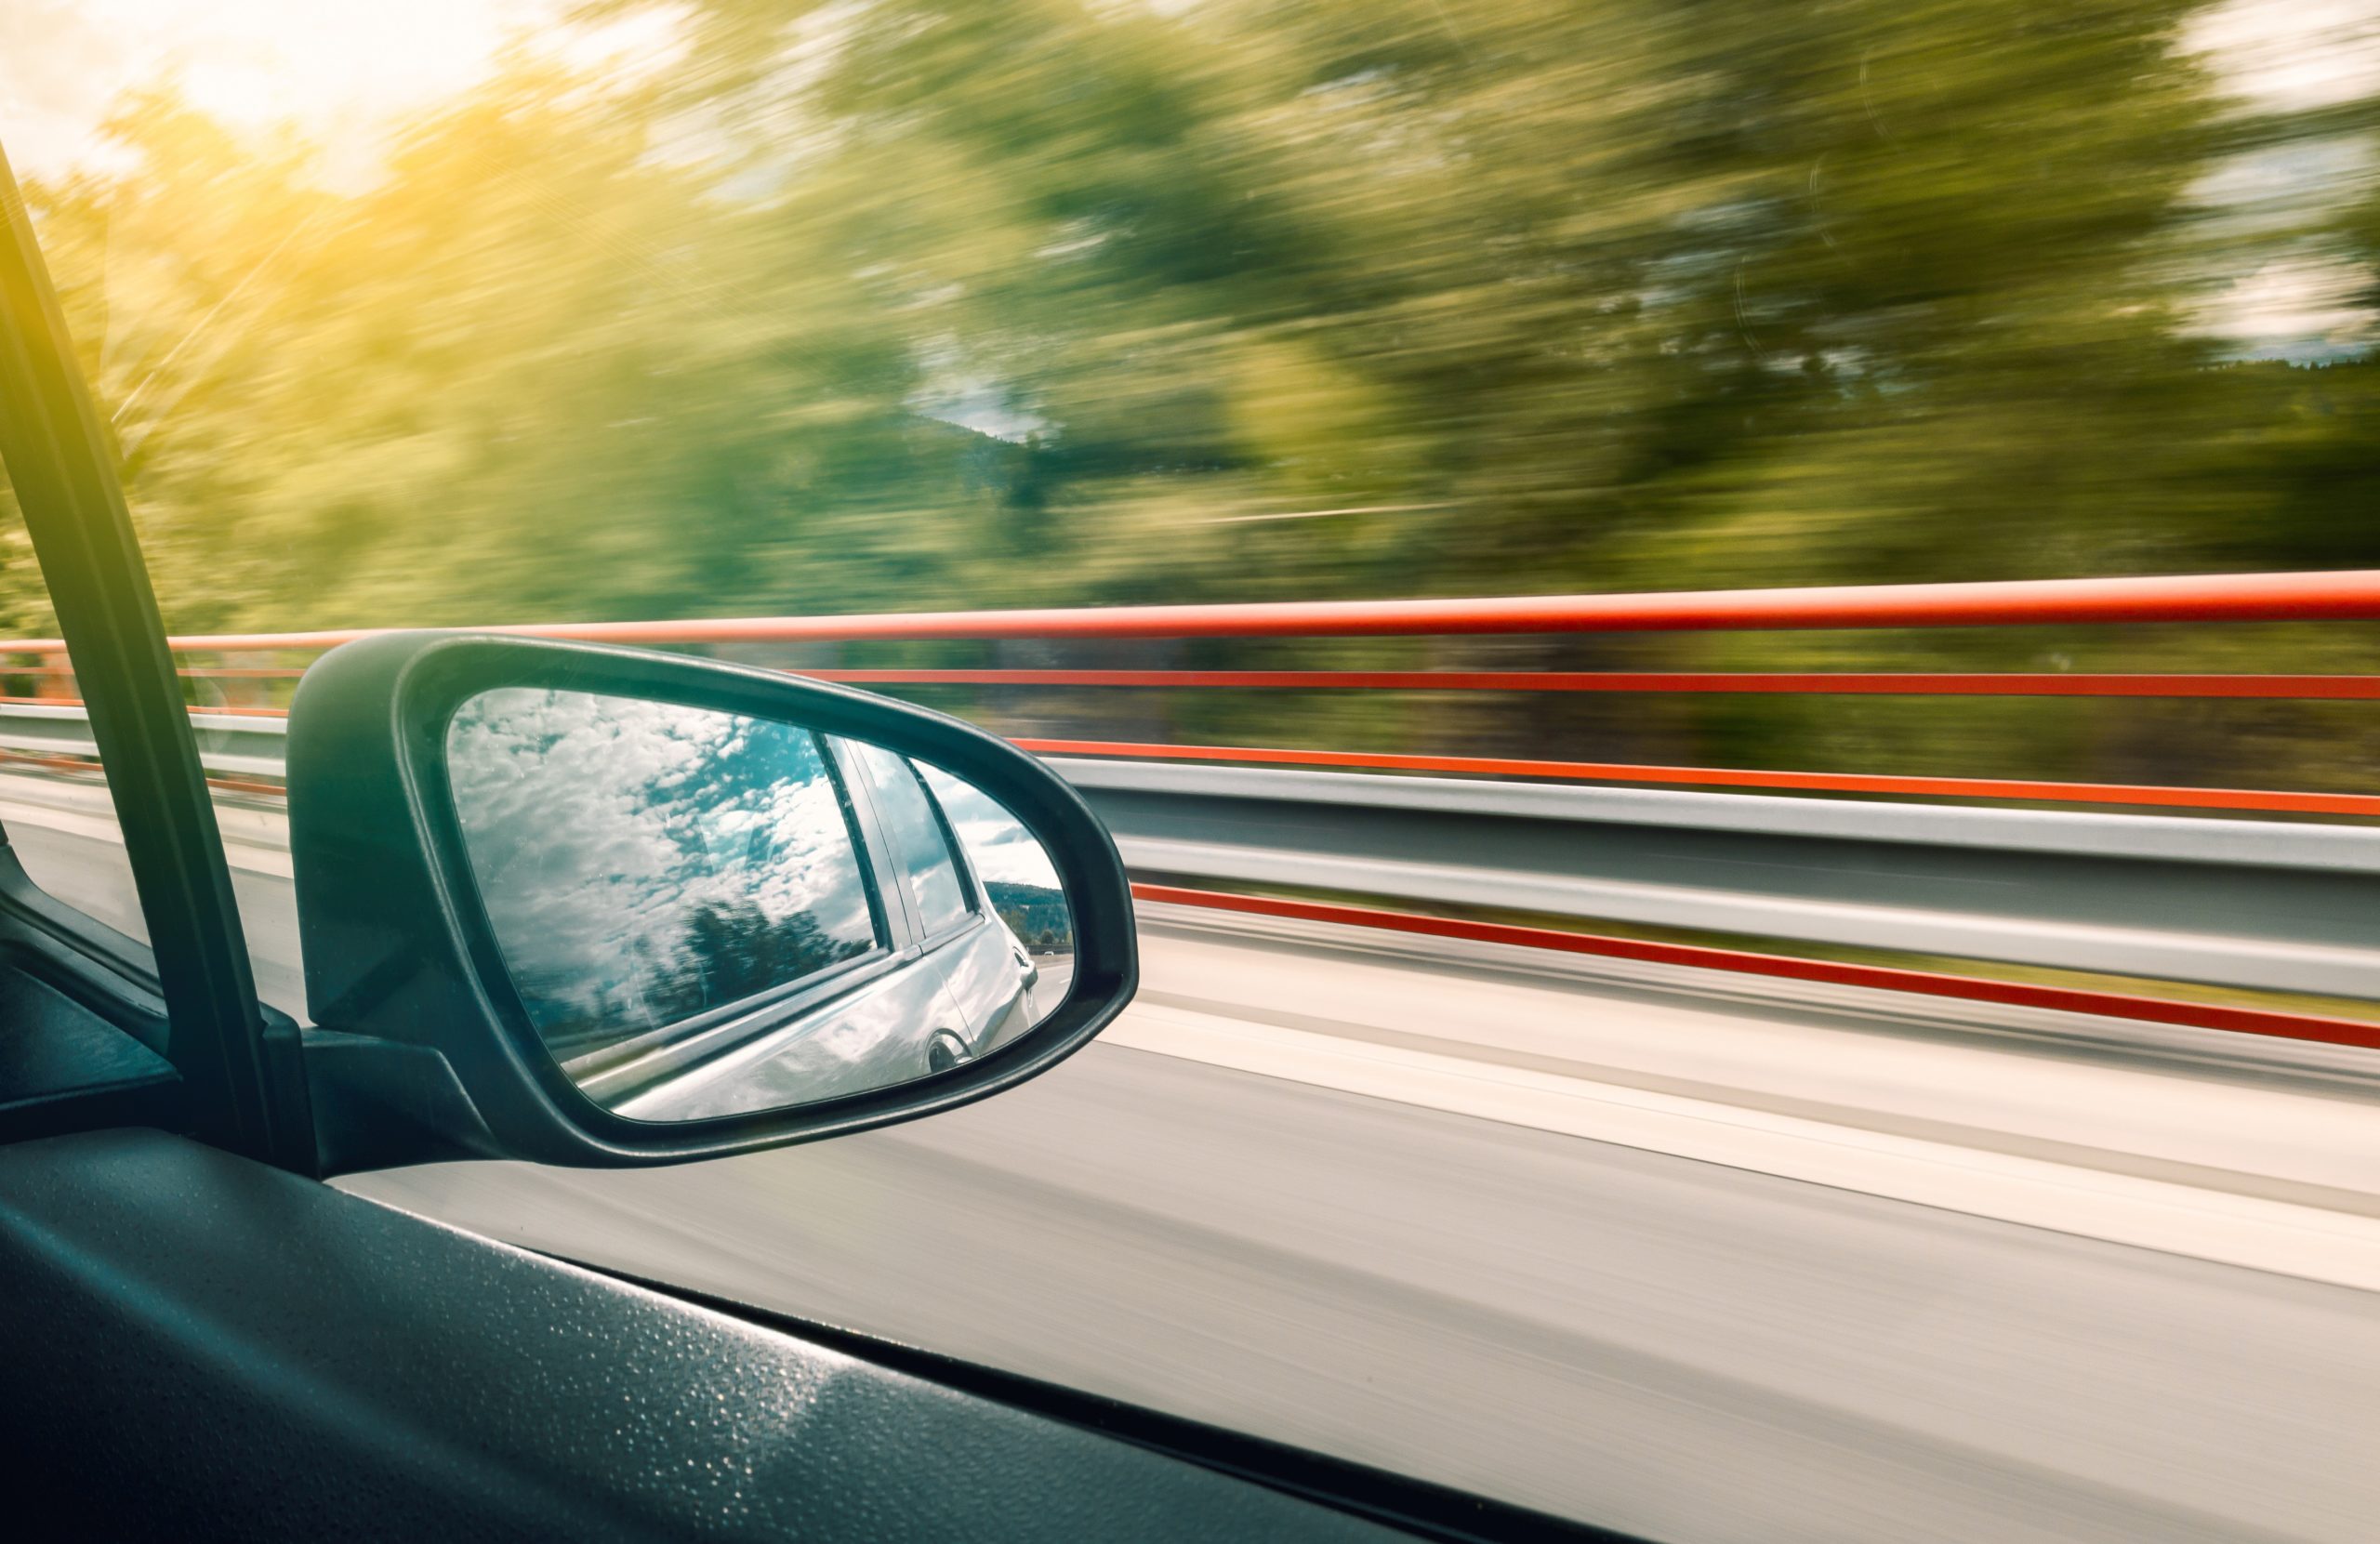 blur in driving car